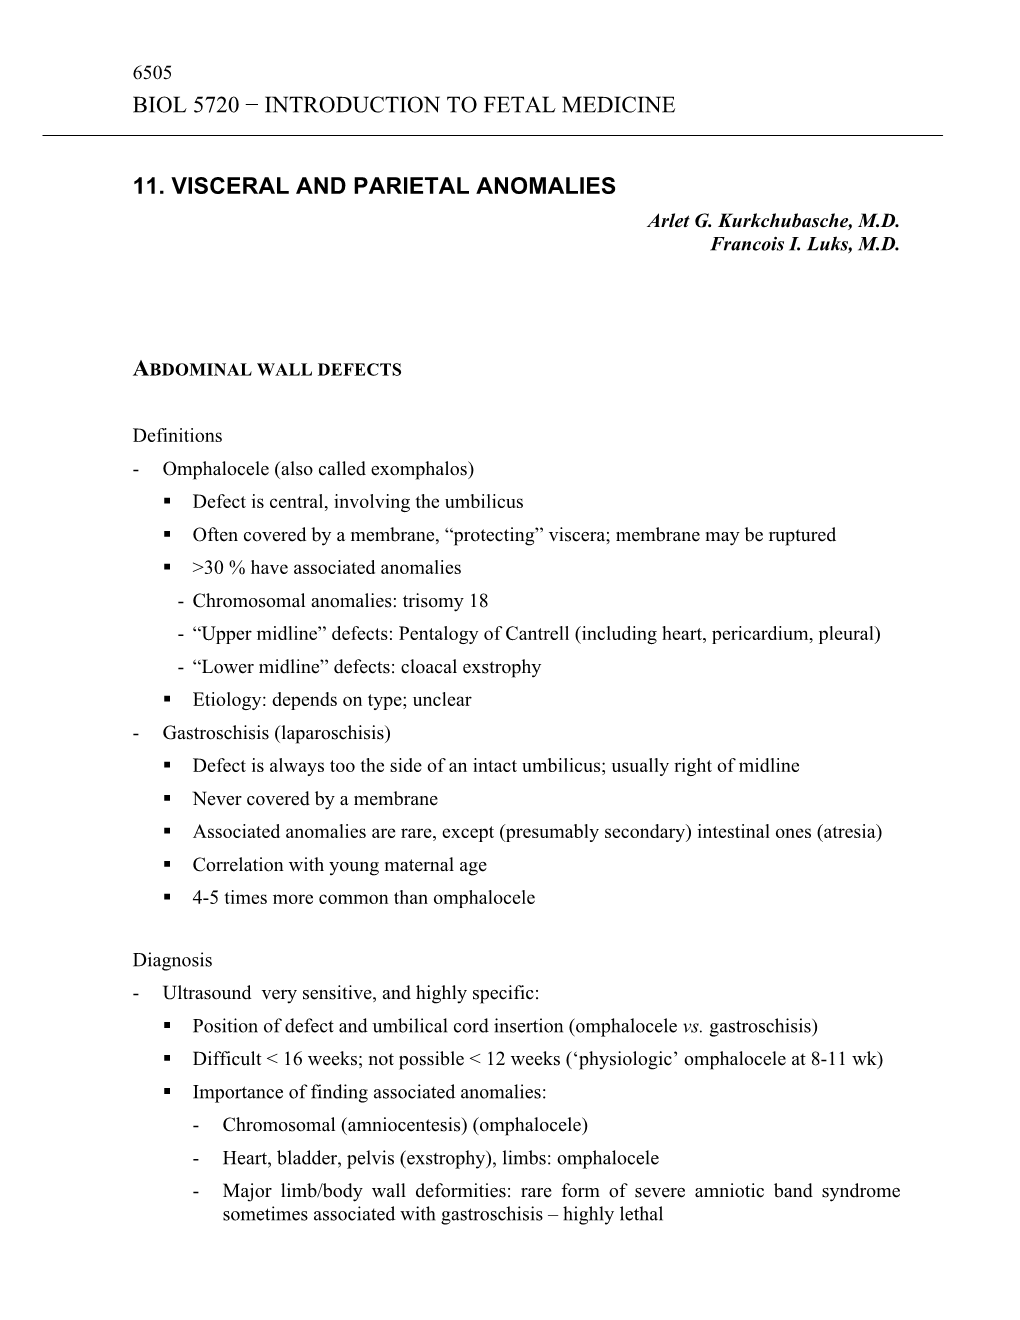 11 Visceral and Parietal Anomalies